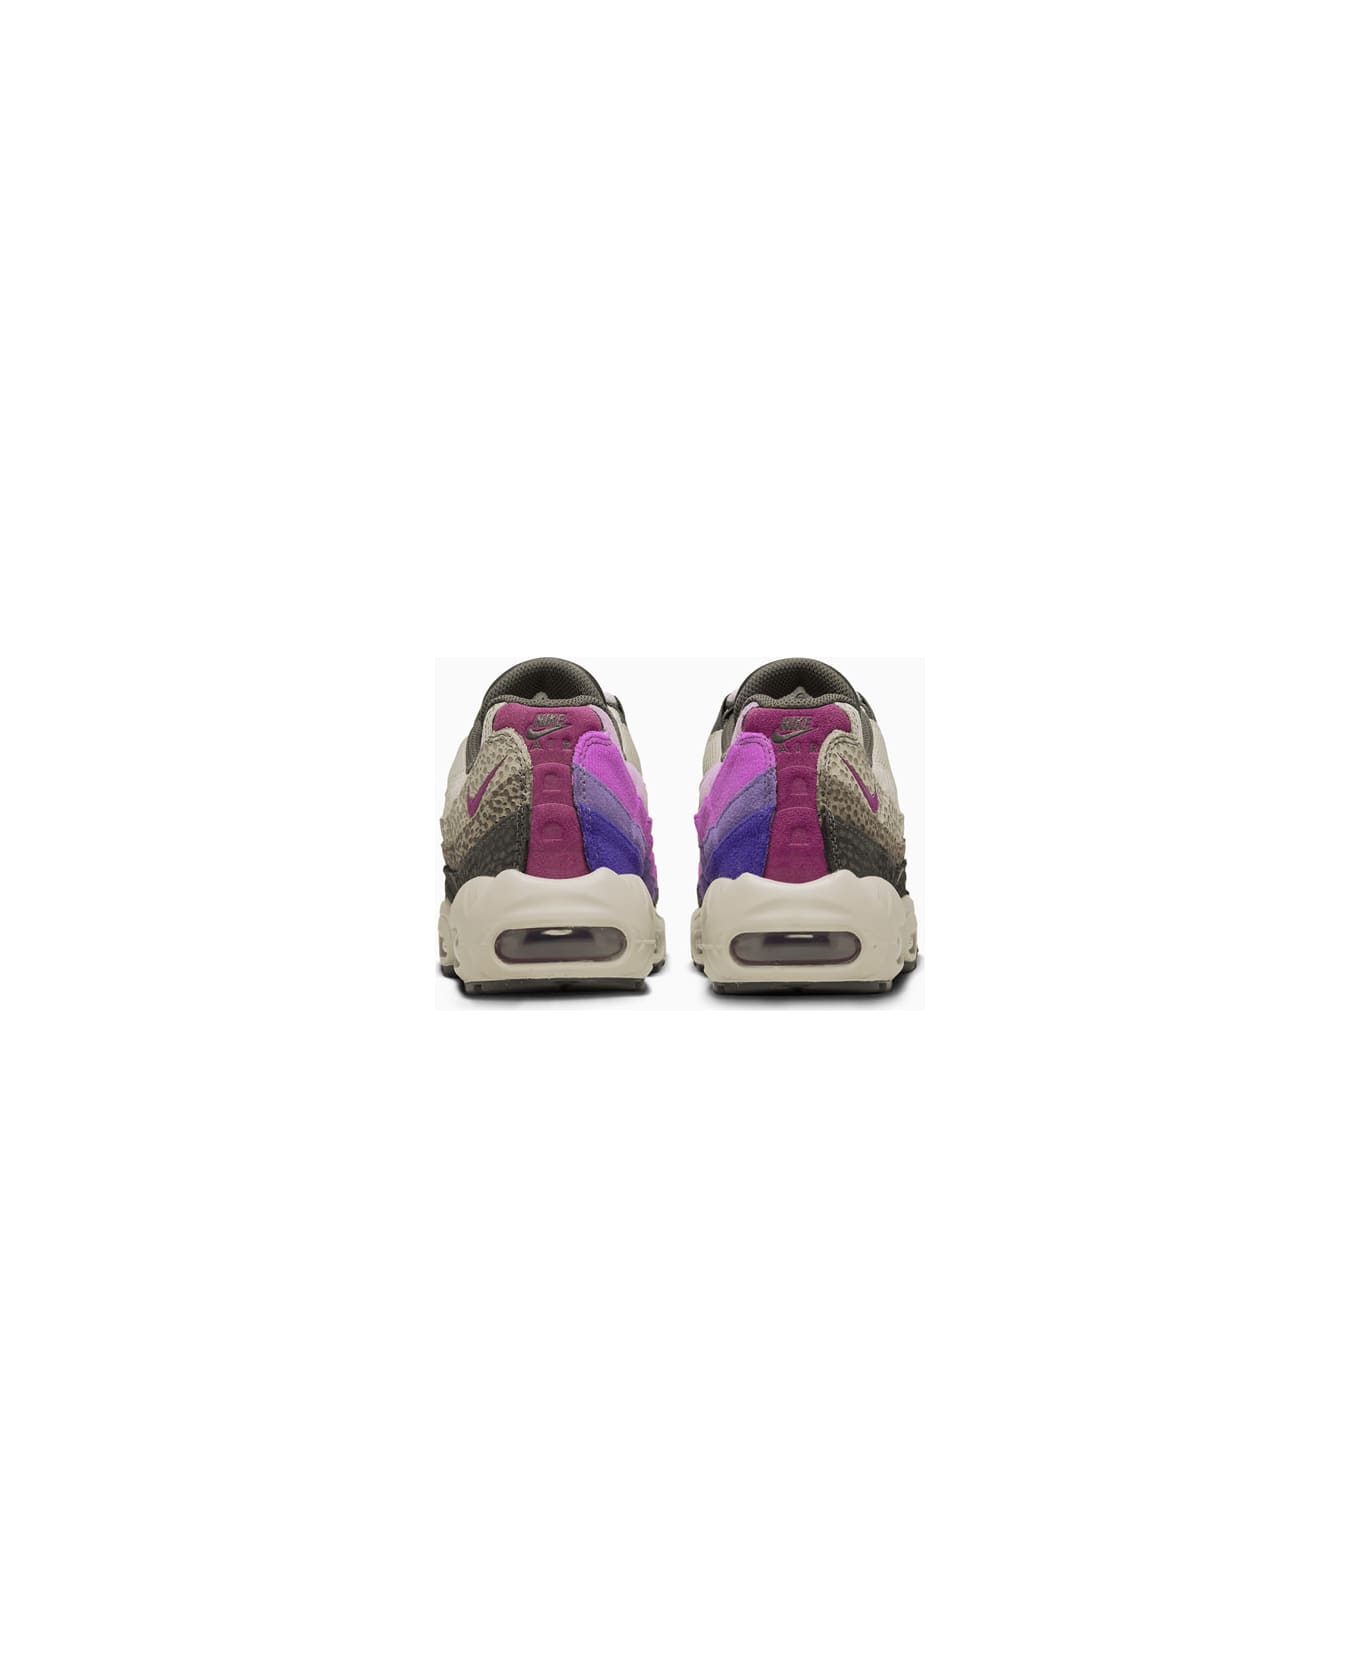 Nike Air Max 95 Sneakers Dx2955-001 - Multiple colors